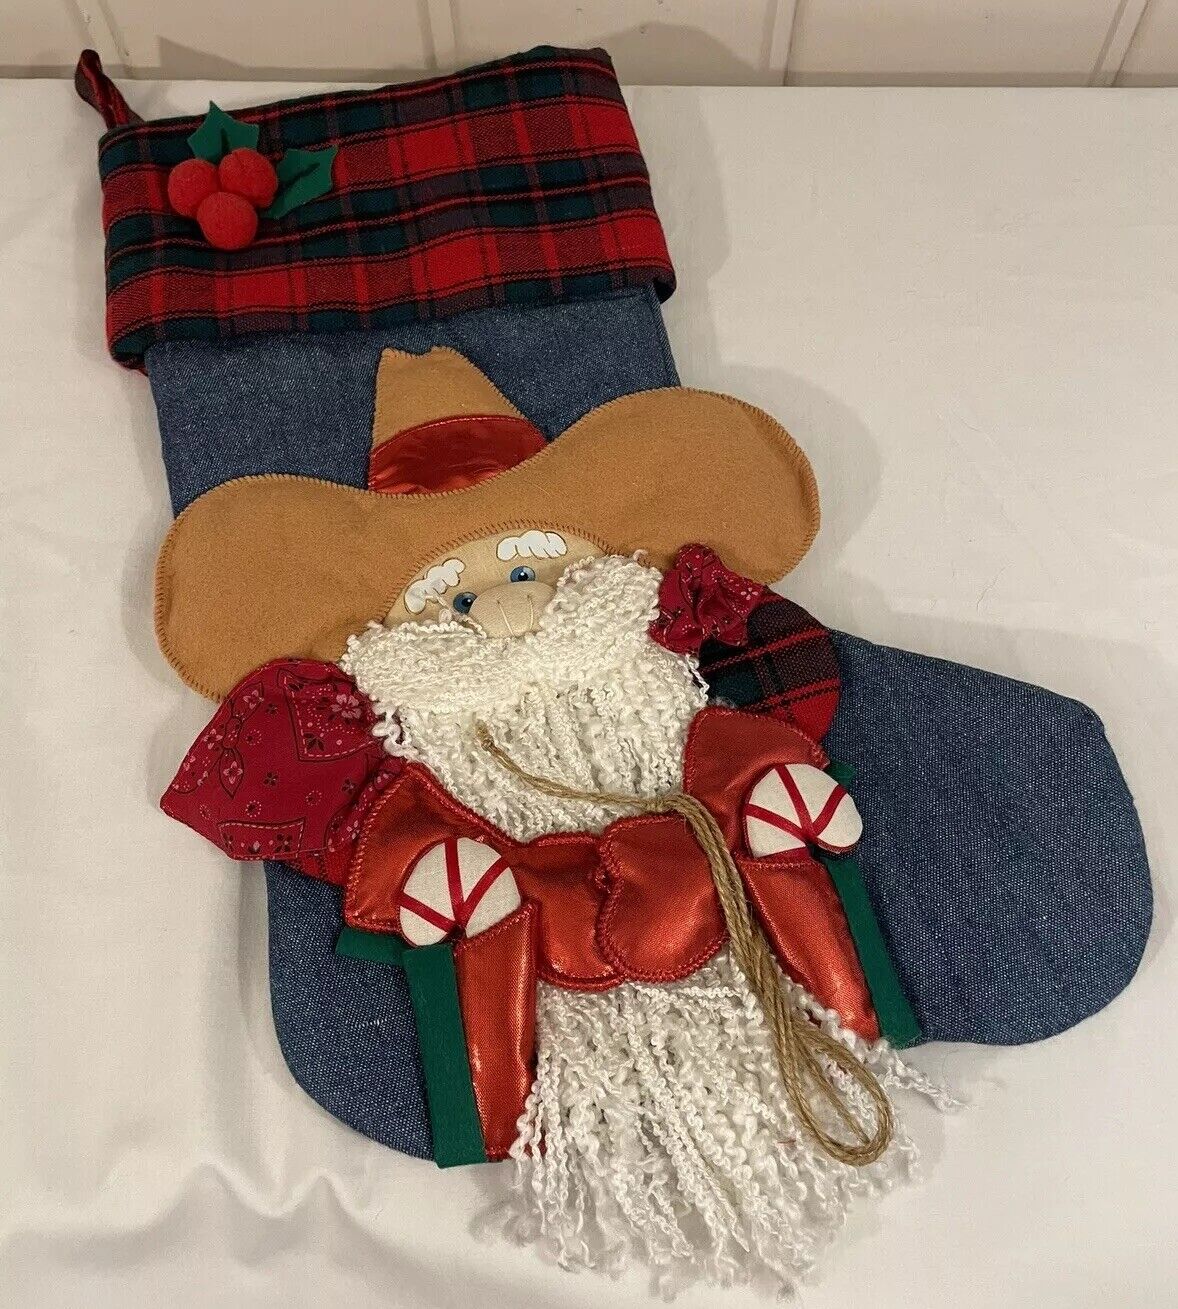 Vintage Cowboy Santa Claus Christmas Stocking Candy Cane Plaid Holiday